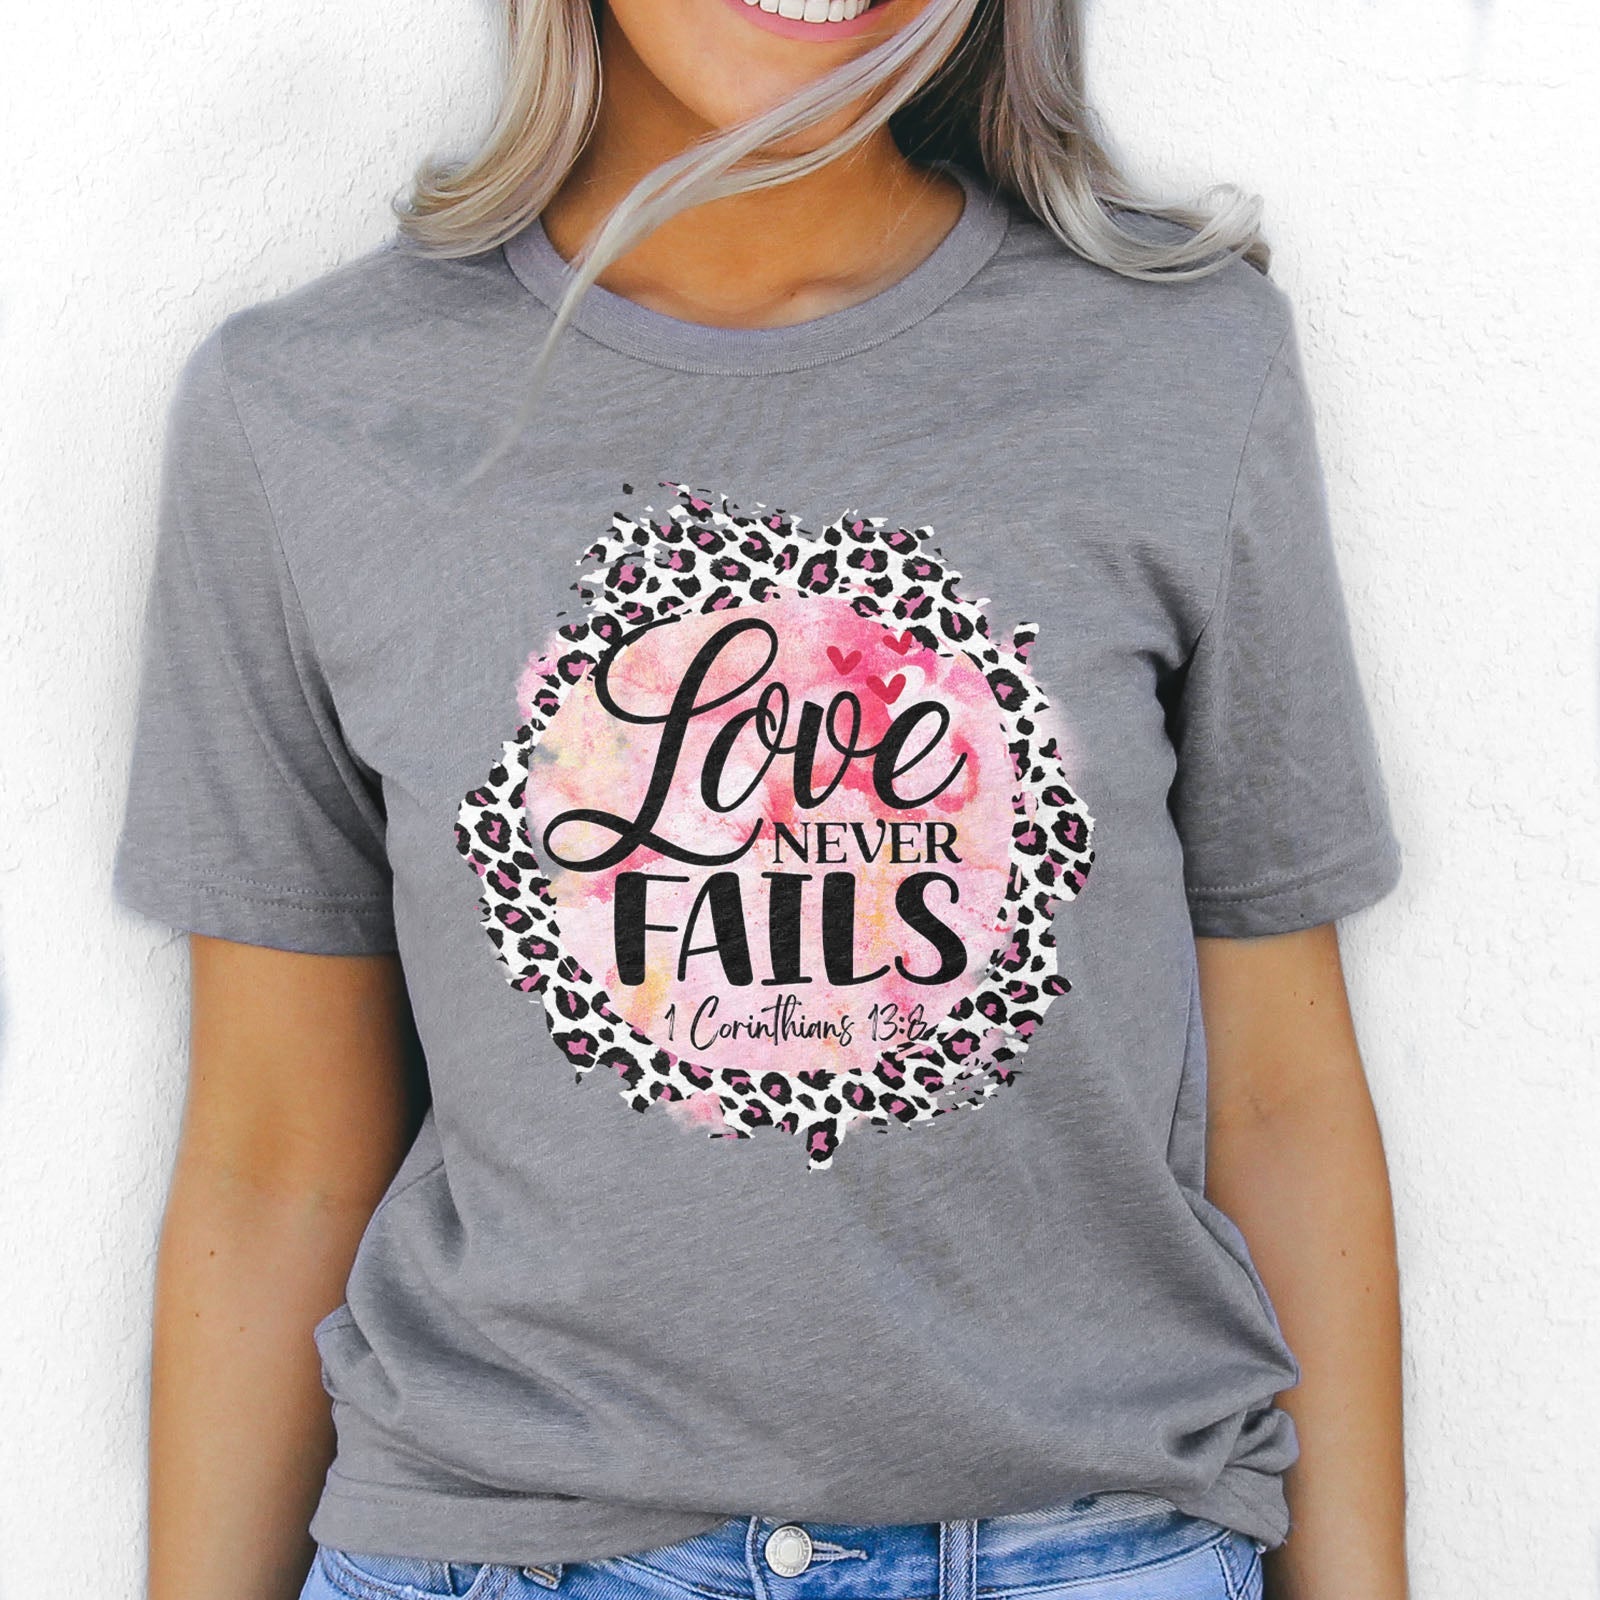 Love Never Fails Pink Leopard 1 Corinthians 13:8 Tee Shirts For Women - Christian Shirts for Women - Religious Tee Shirts